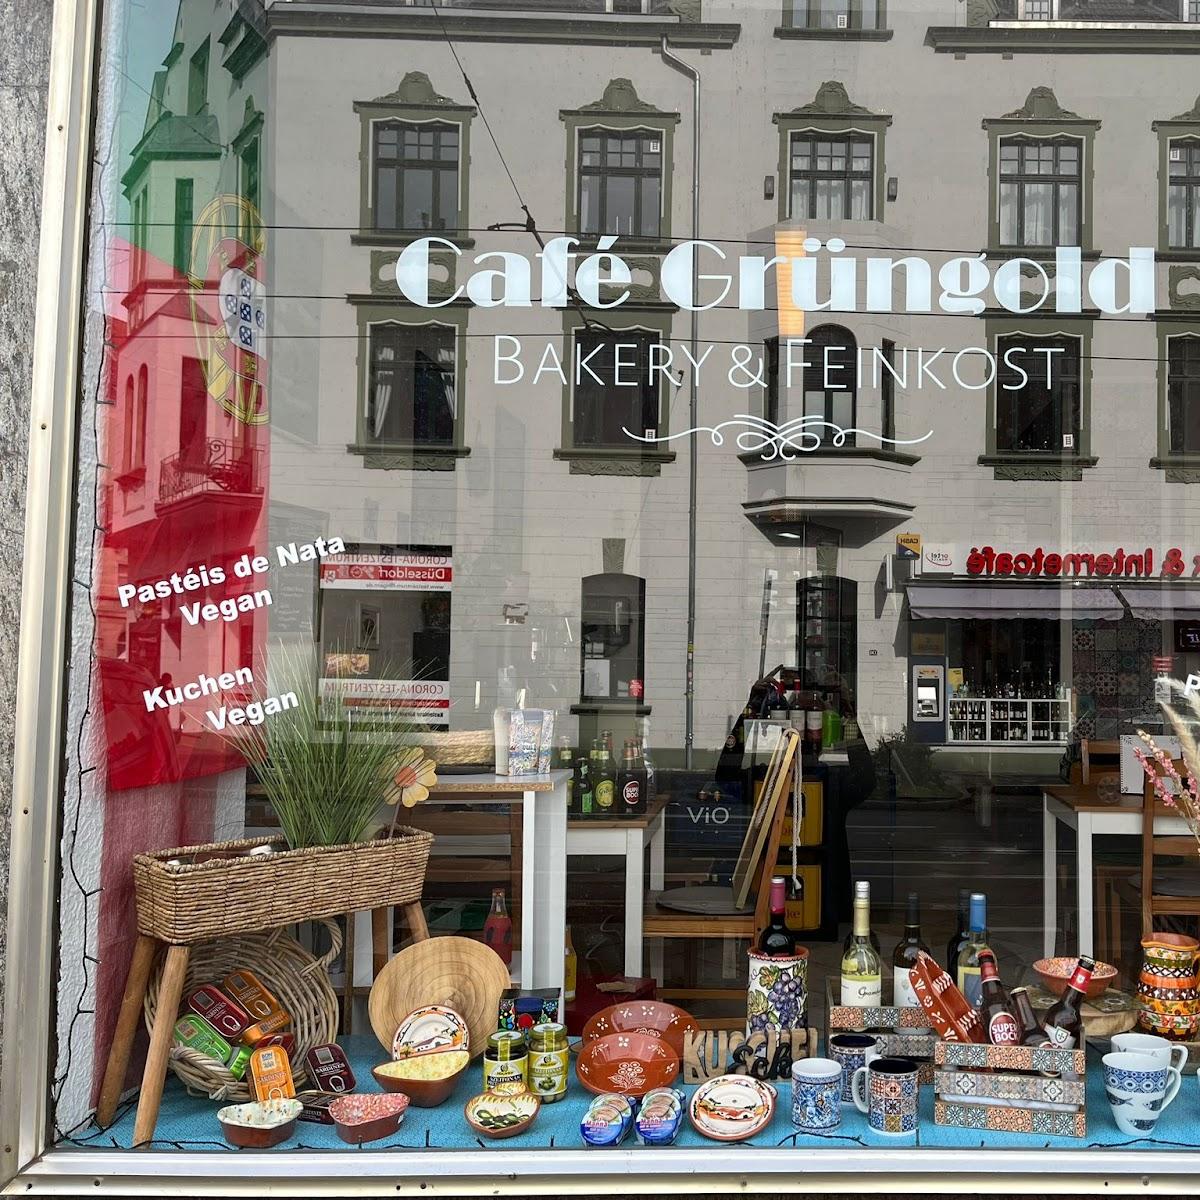 Restaurant "Café Grüngold Bakery&Feinkost" in Düsseldorf